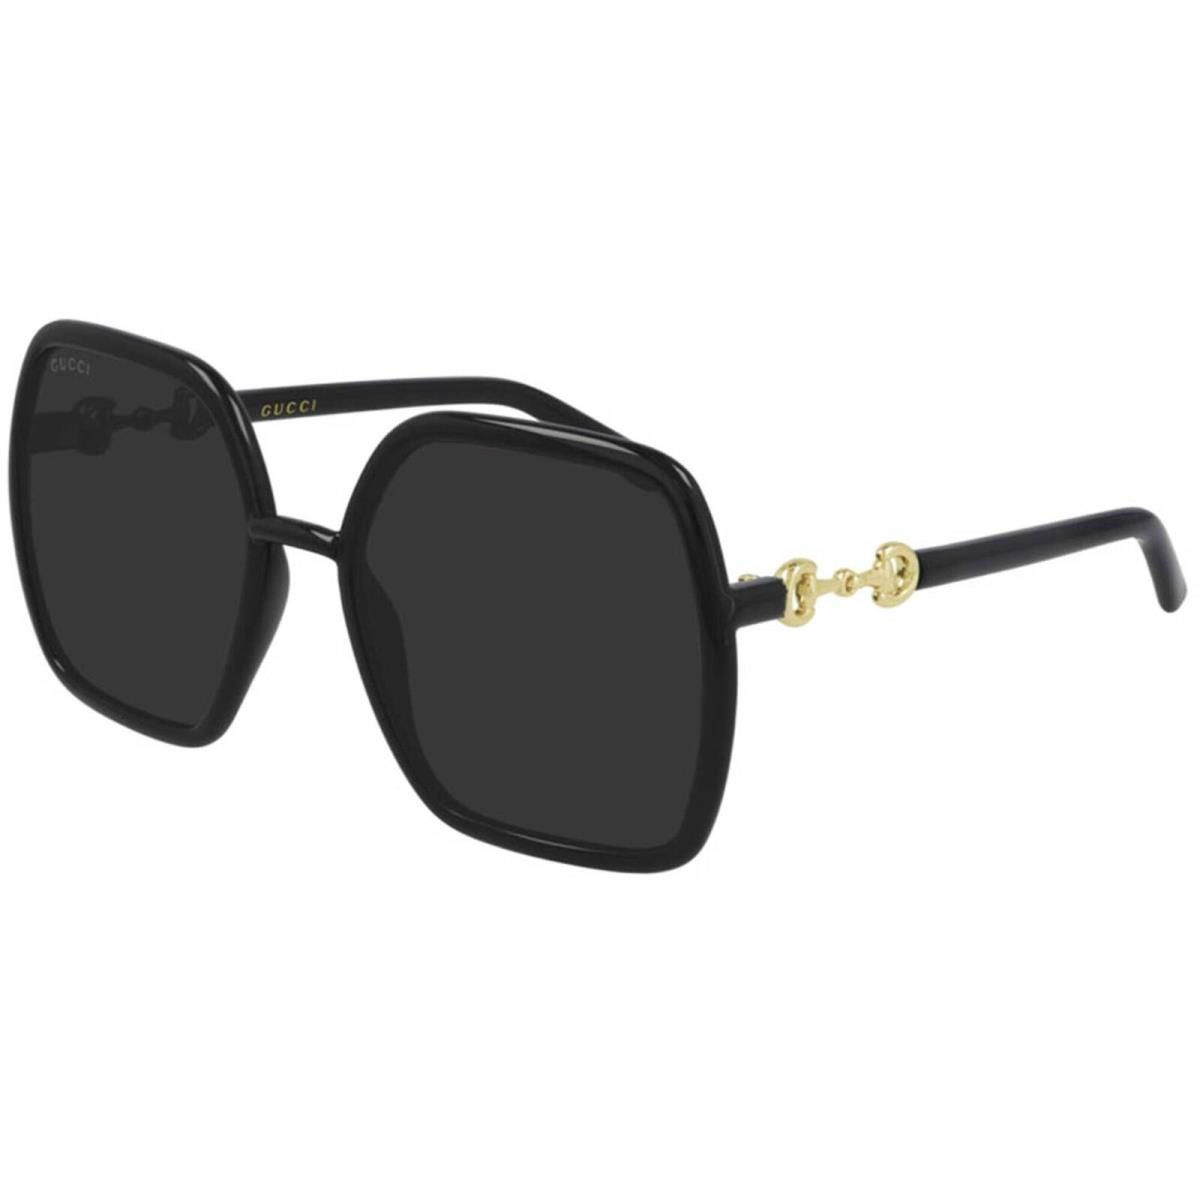 Gucci Women`s Sunglasses Full Rim Black Plastic Square Shape Frame GG0890S 001